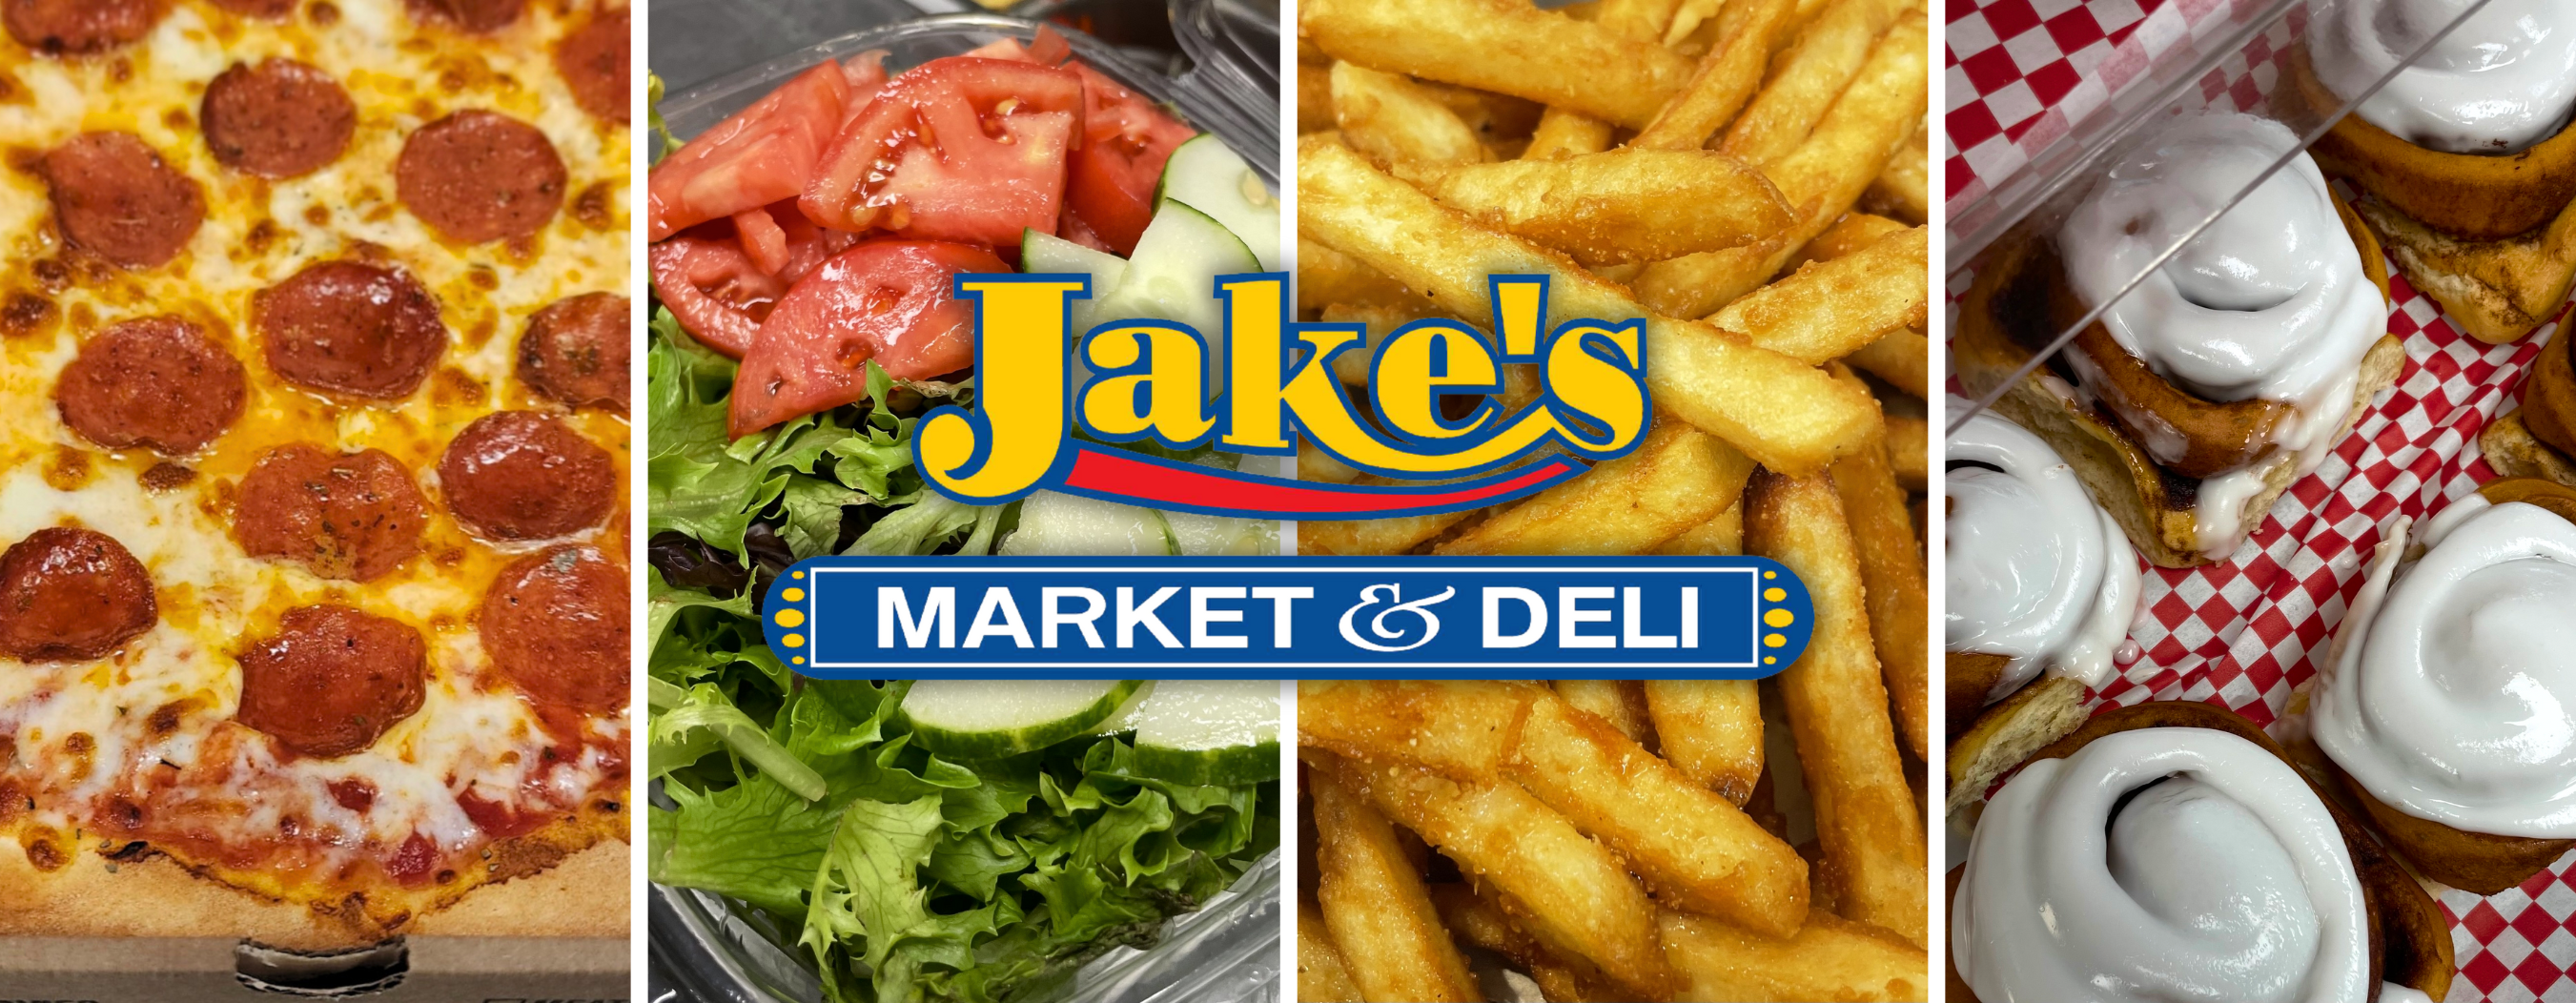 Jakes Market Slide